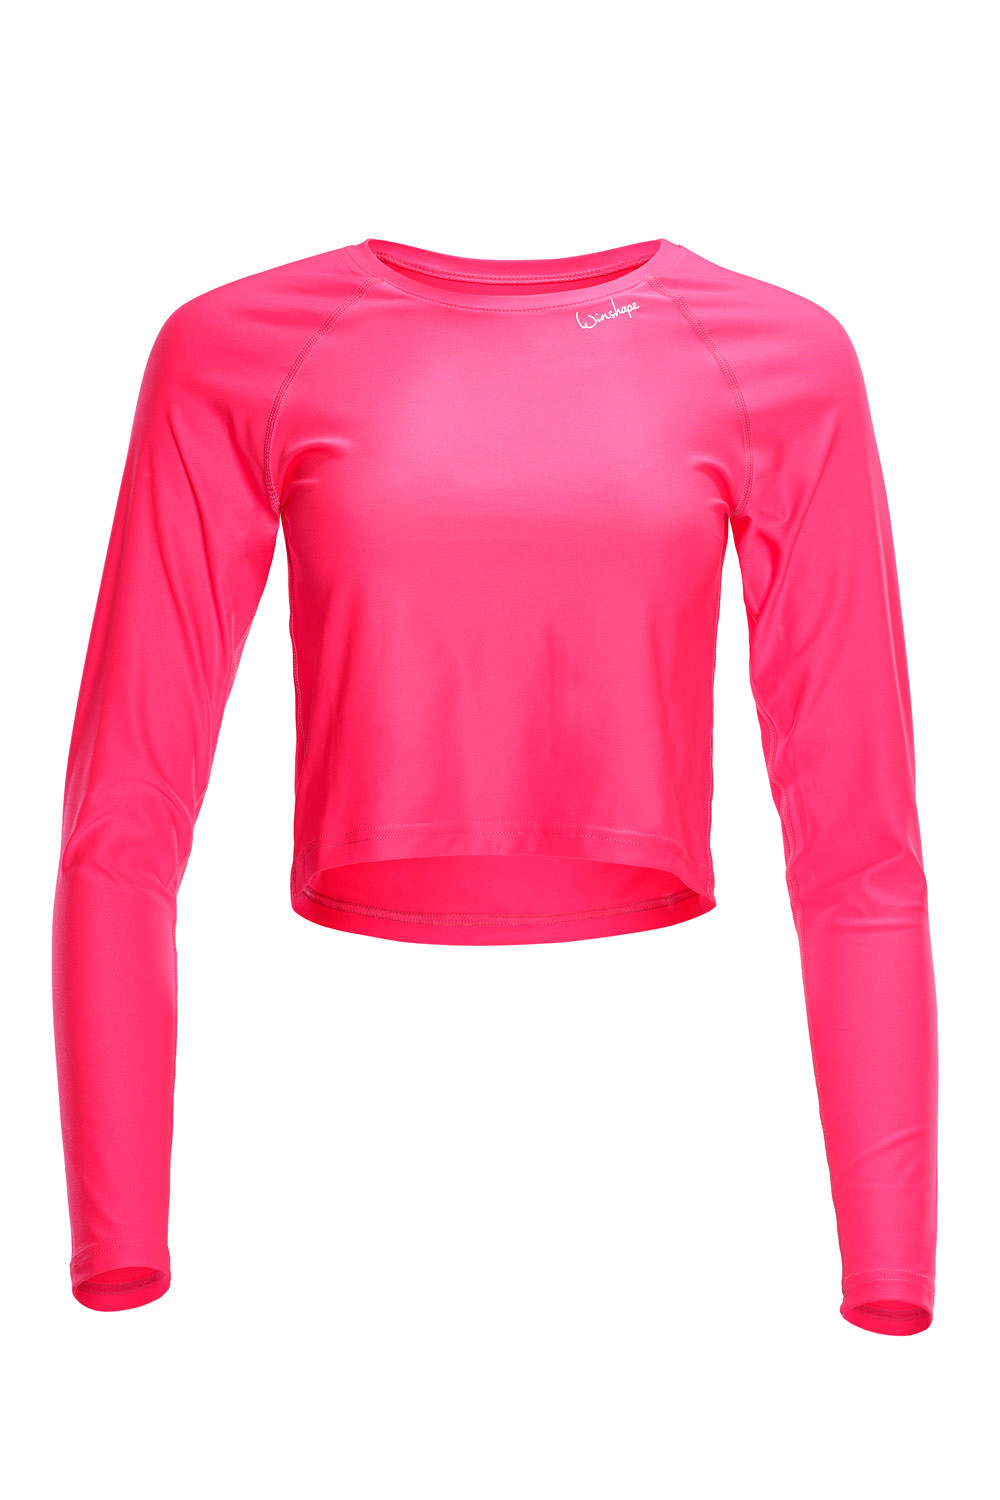 Sleeve AET116, neon Functional Long pink, Style Light Winshape Top Cropped Slim